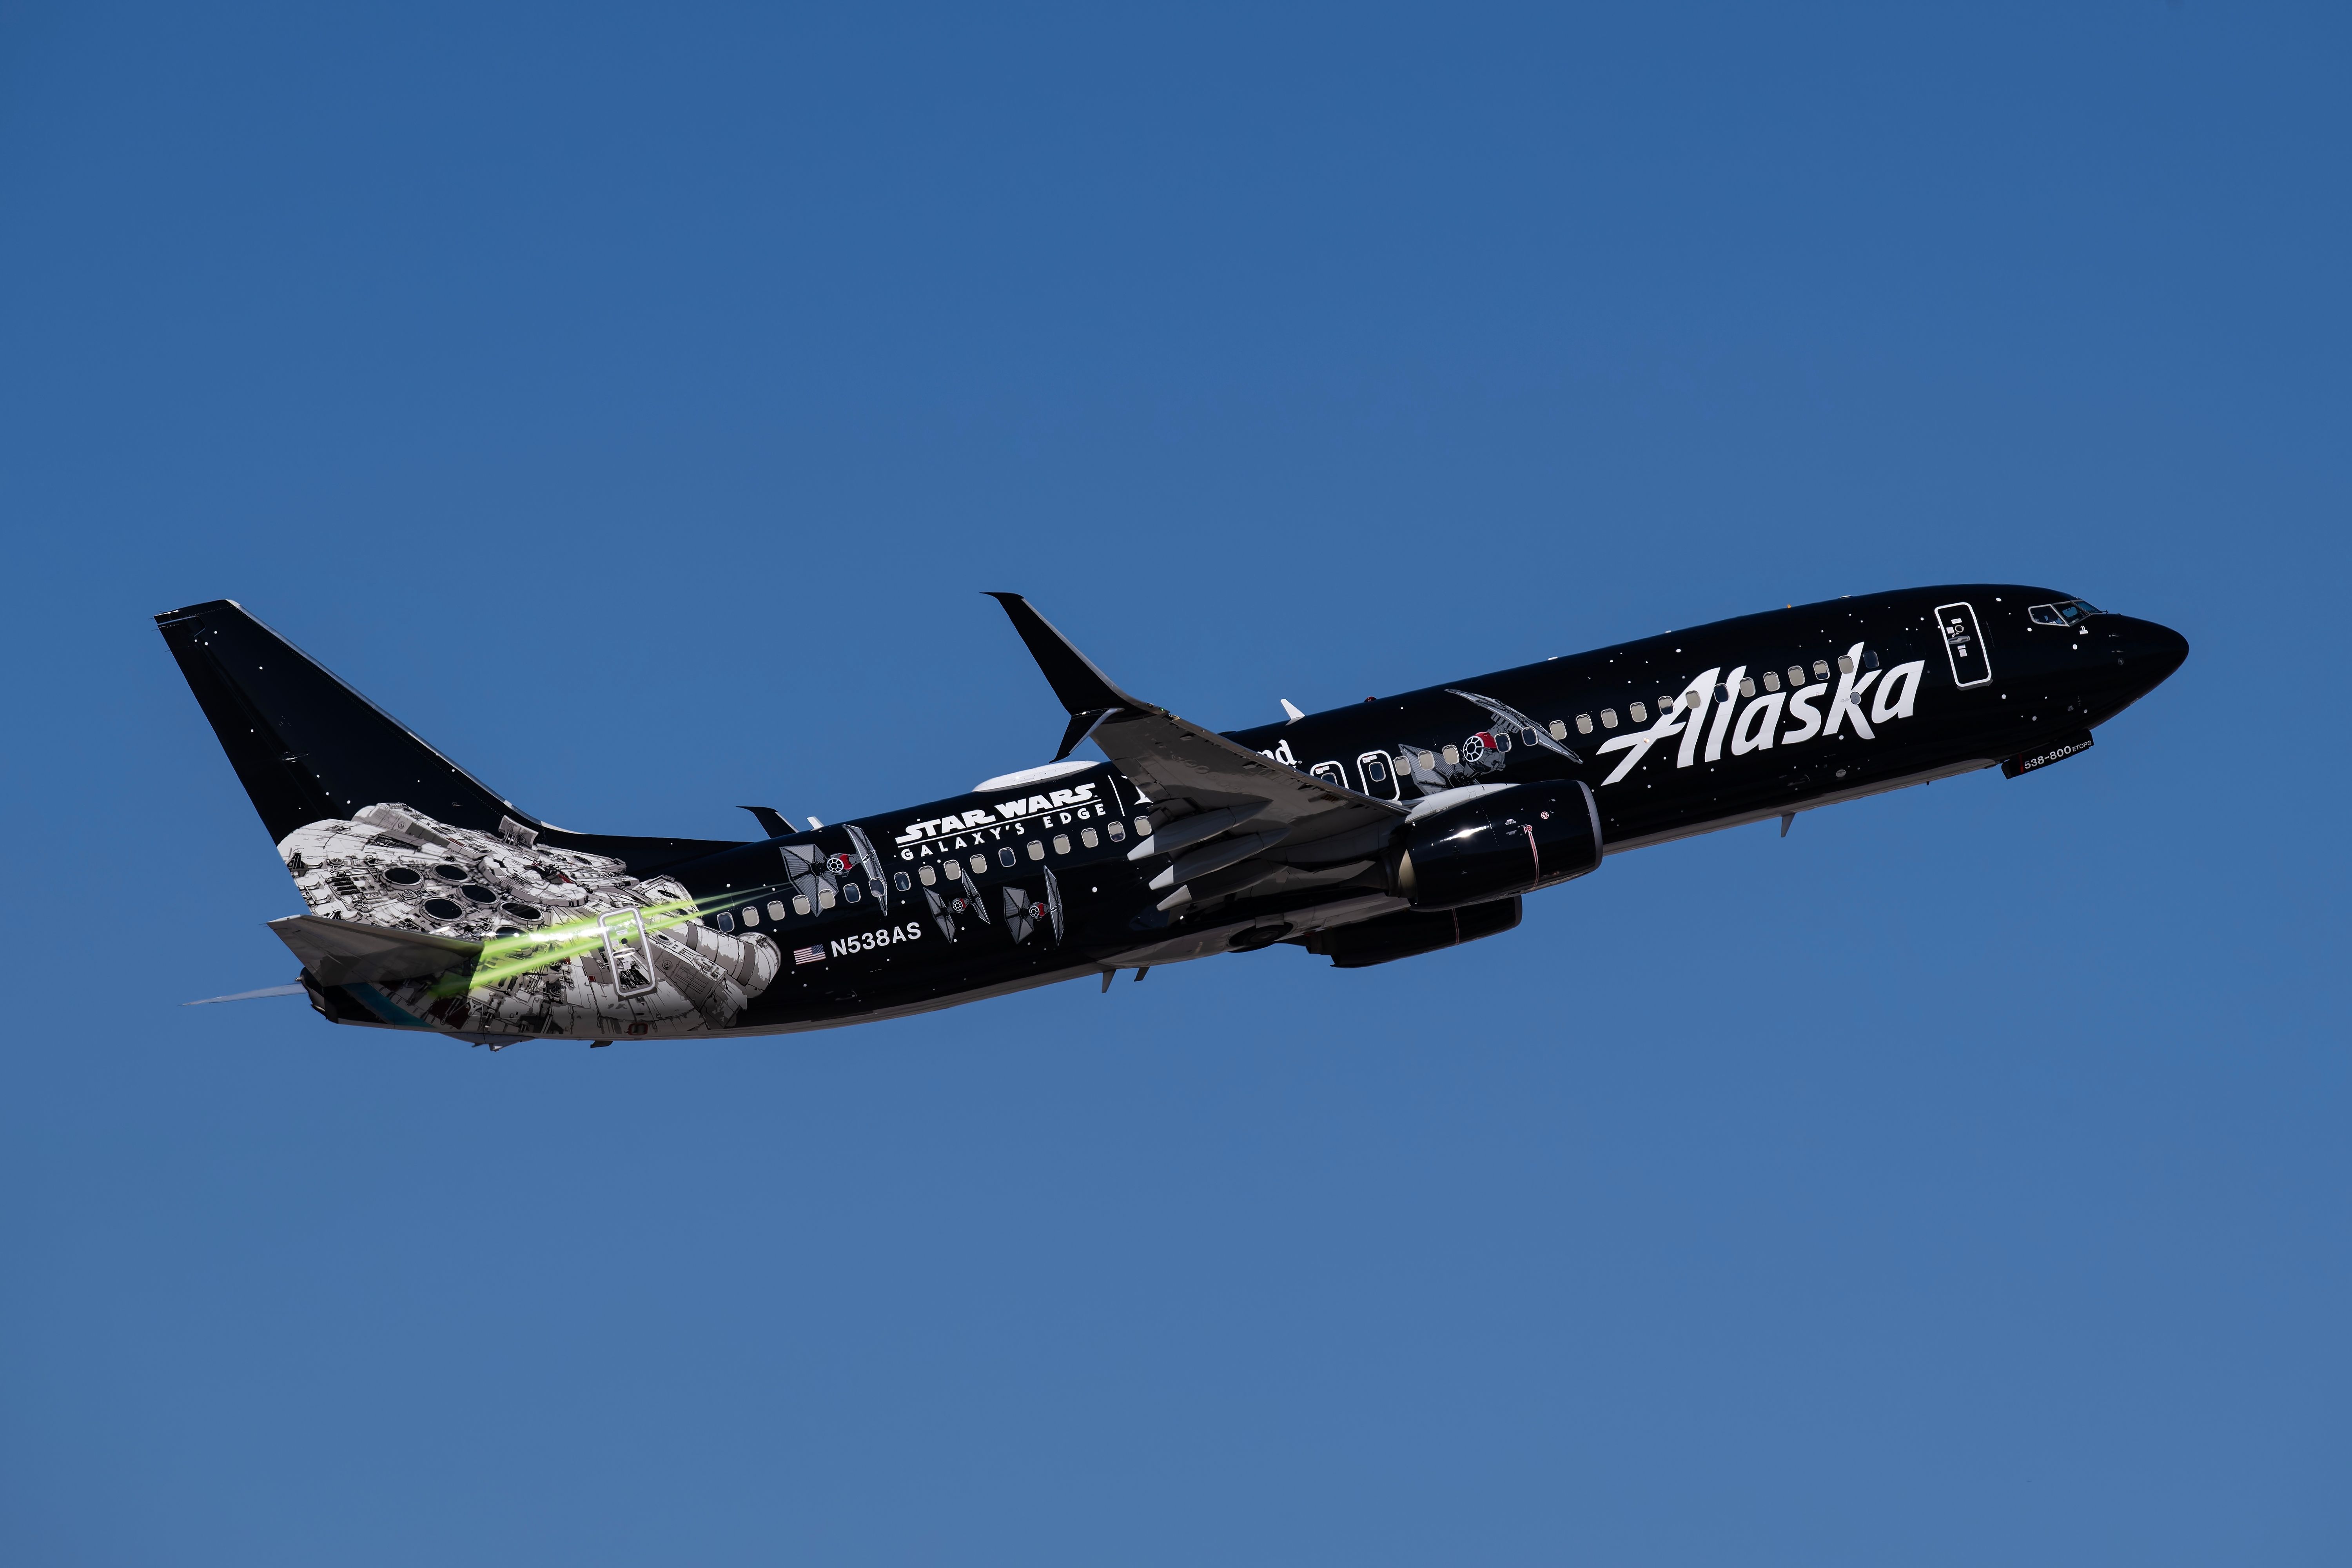 Alaska Airlines Boeing 737 Star Wars livery